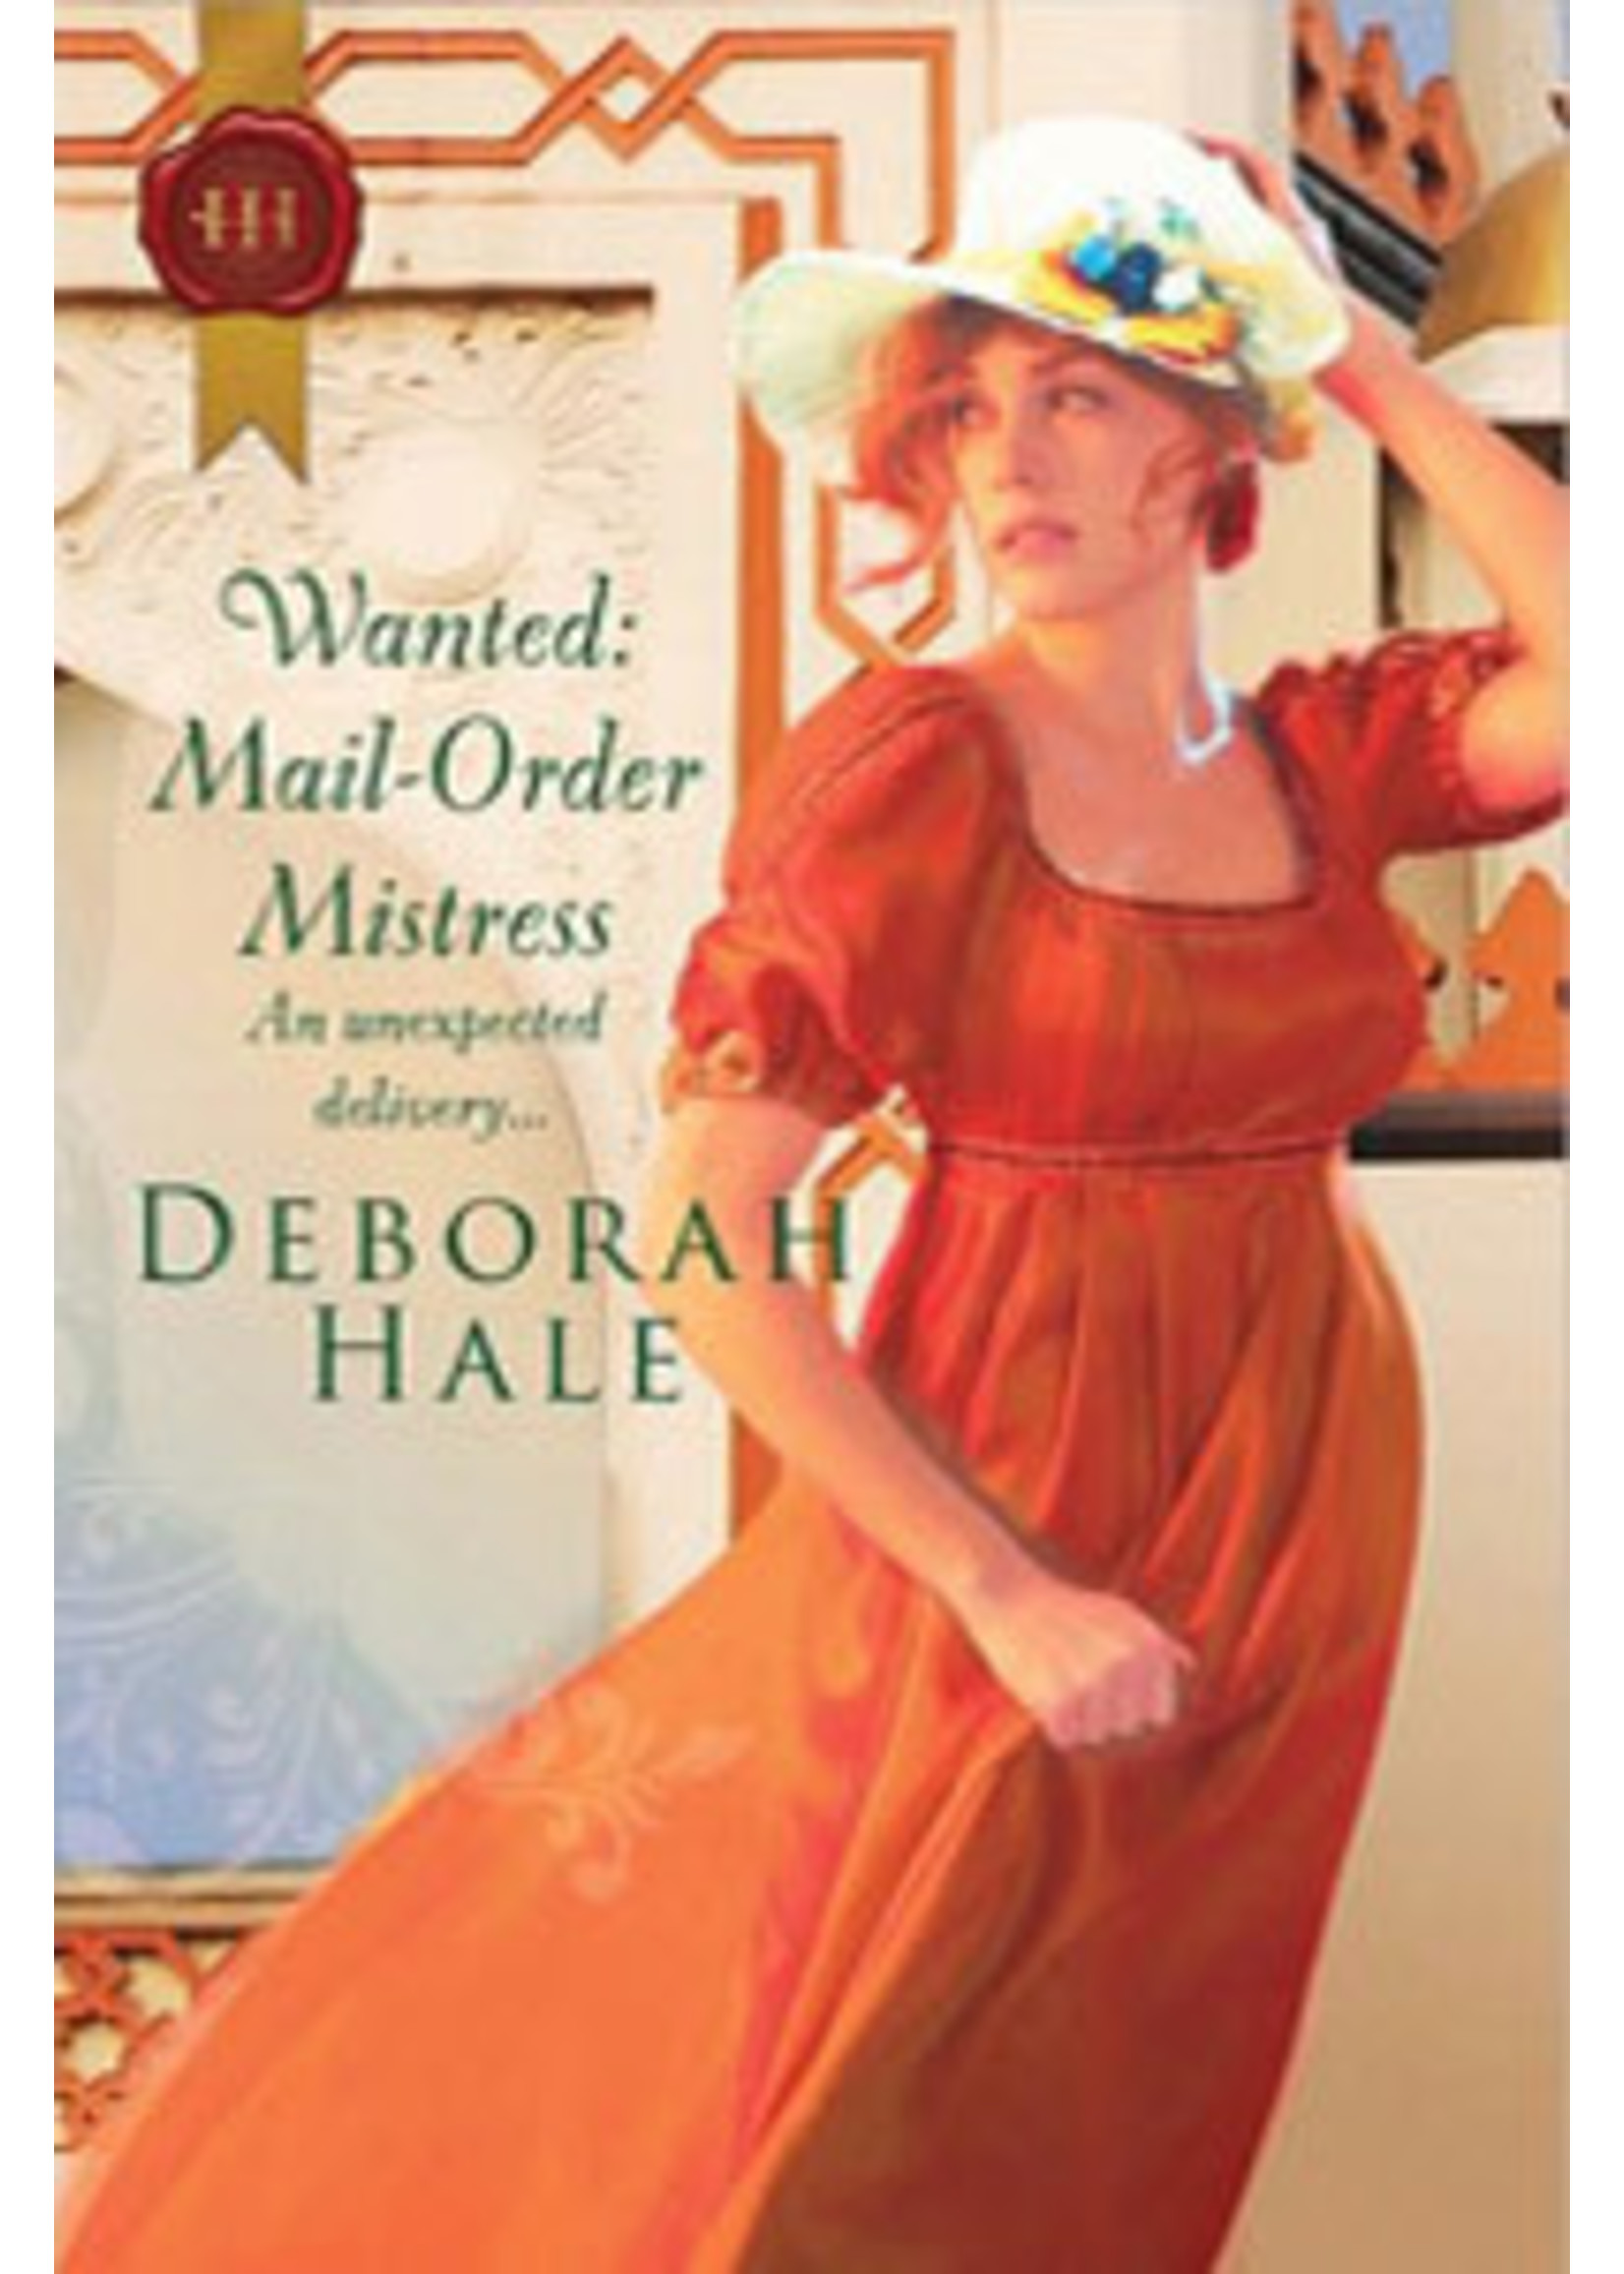 Wanted: Mail-Order Mistress by Deborah Hale